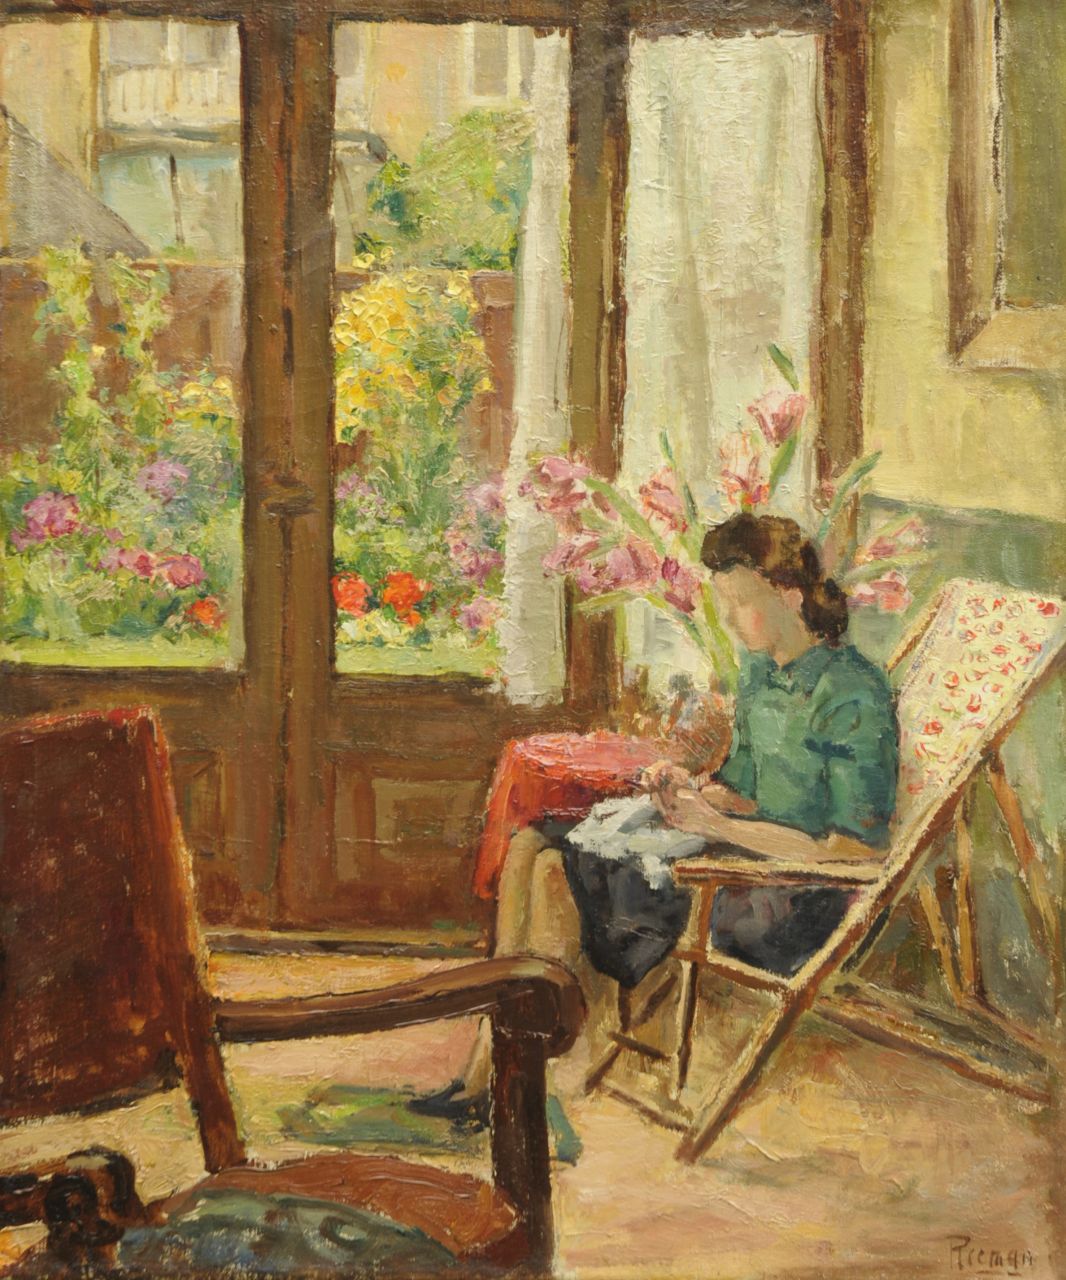 Reeman S.  | Simon Reeman, Woman in interior, oil on canvas 60.0 x 50.6 cm, signed l.r.